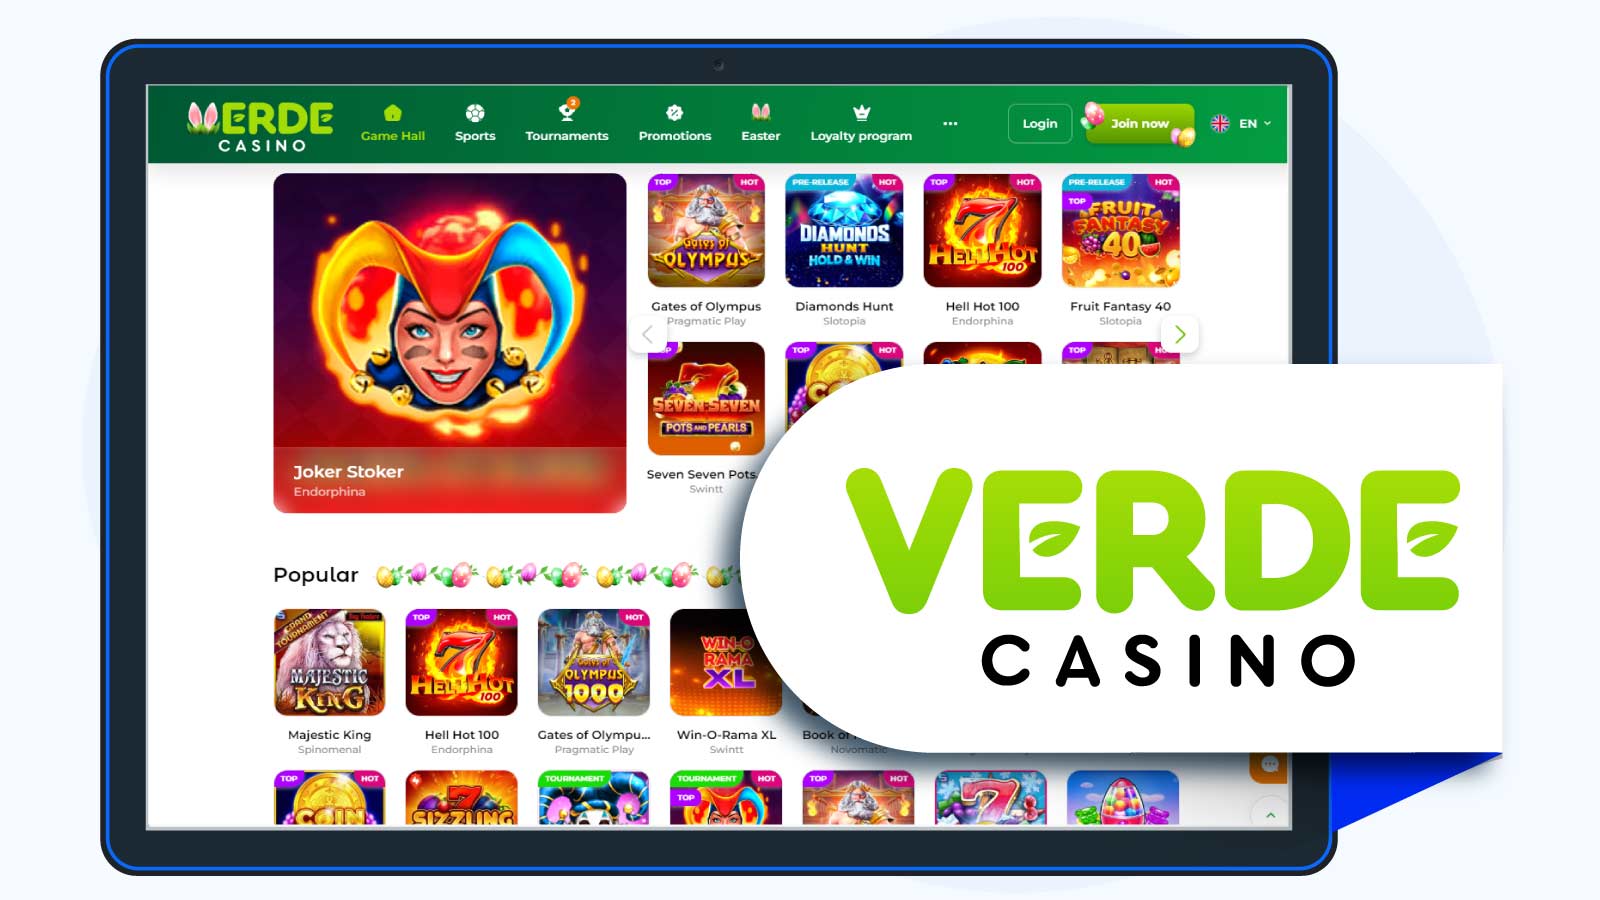 VerdeCasino – Editor’s Choice For The Best Brand New Casino Site